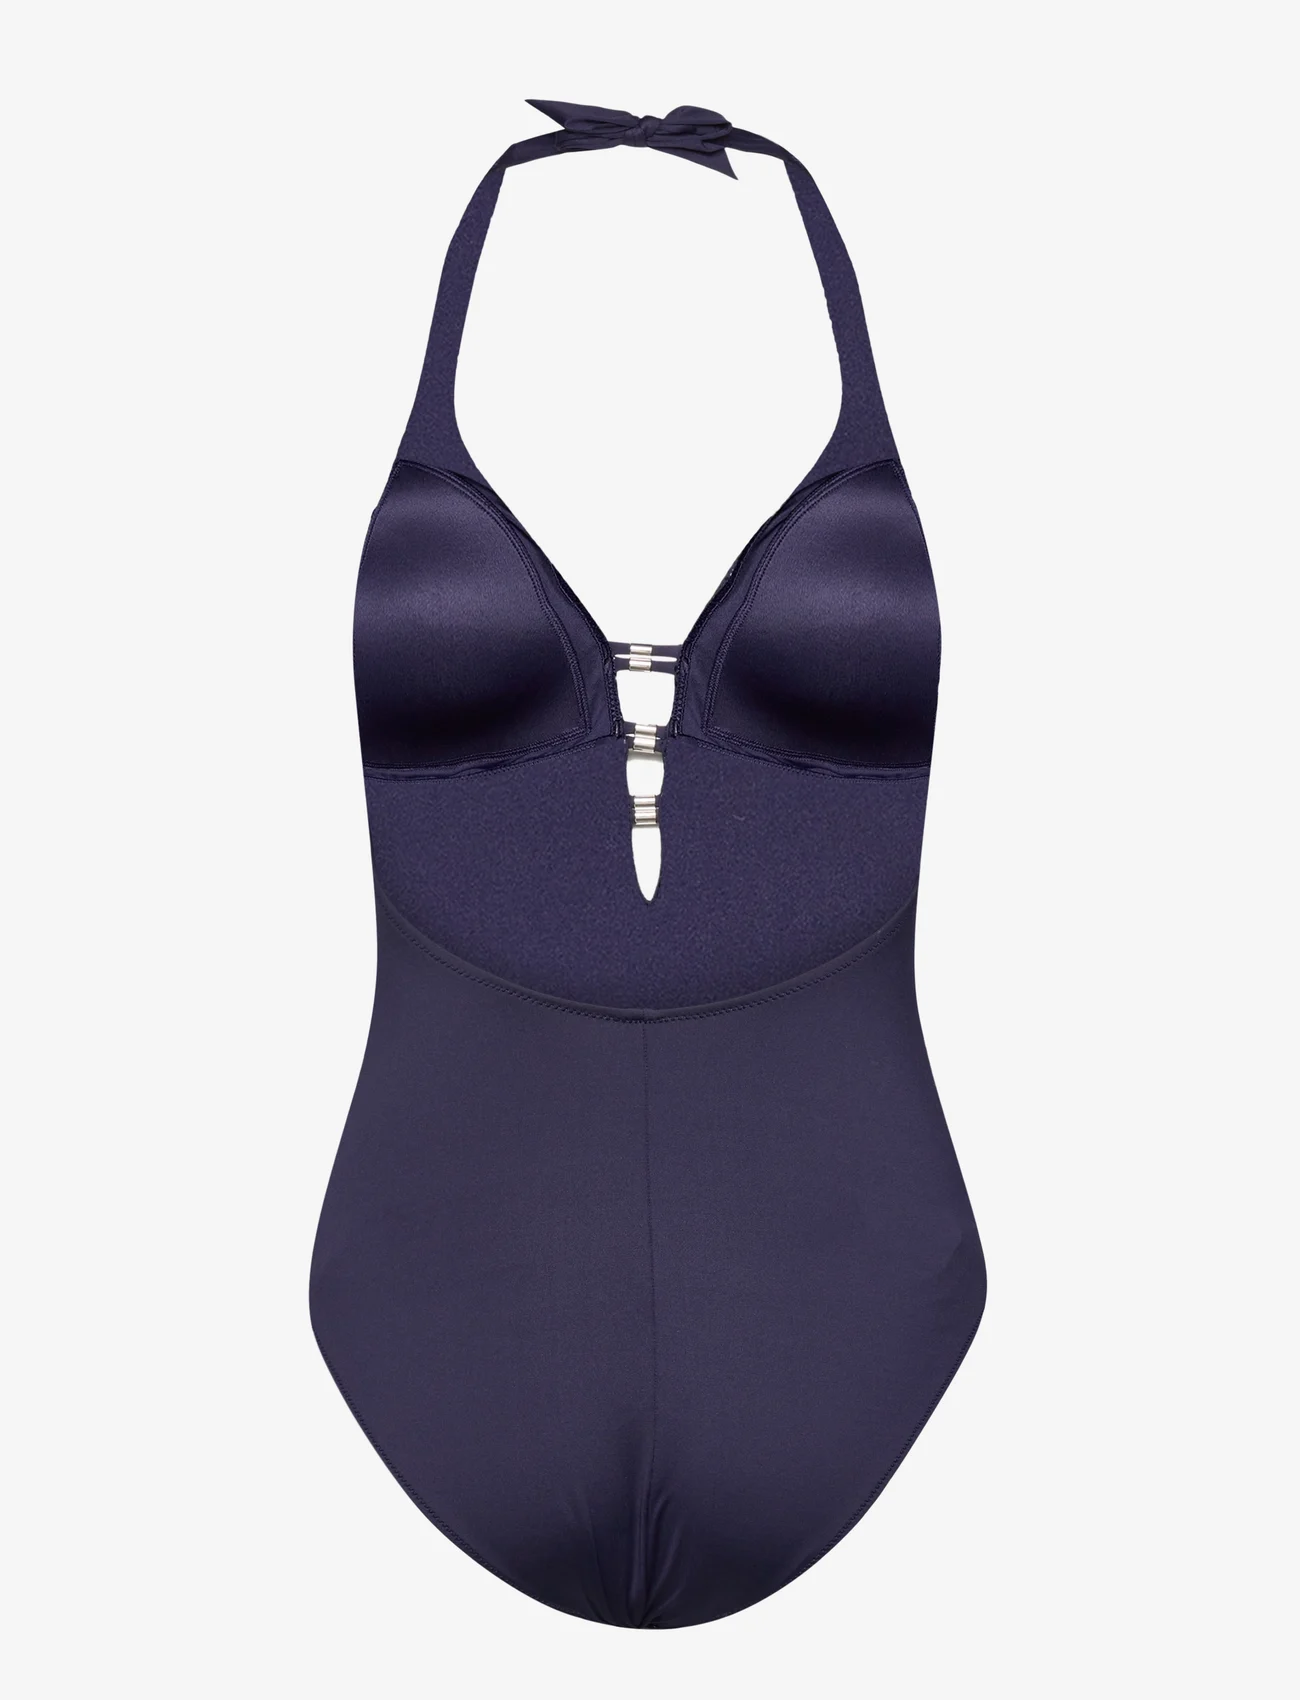 Marie Jo - SAN DOMINO swimsuit - swimsuits - evening blue - 1